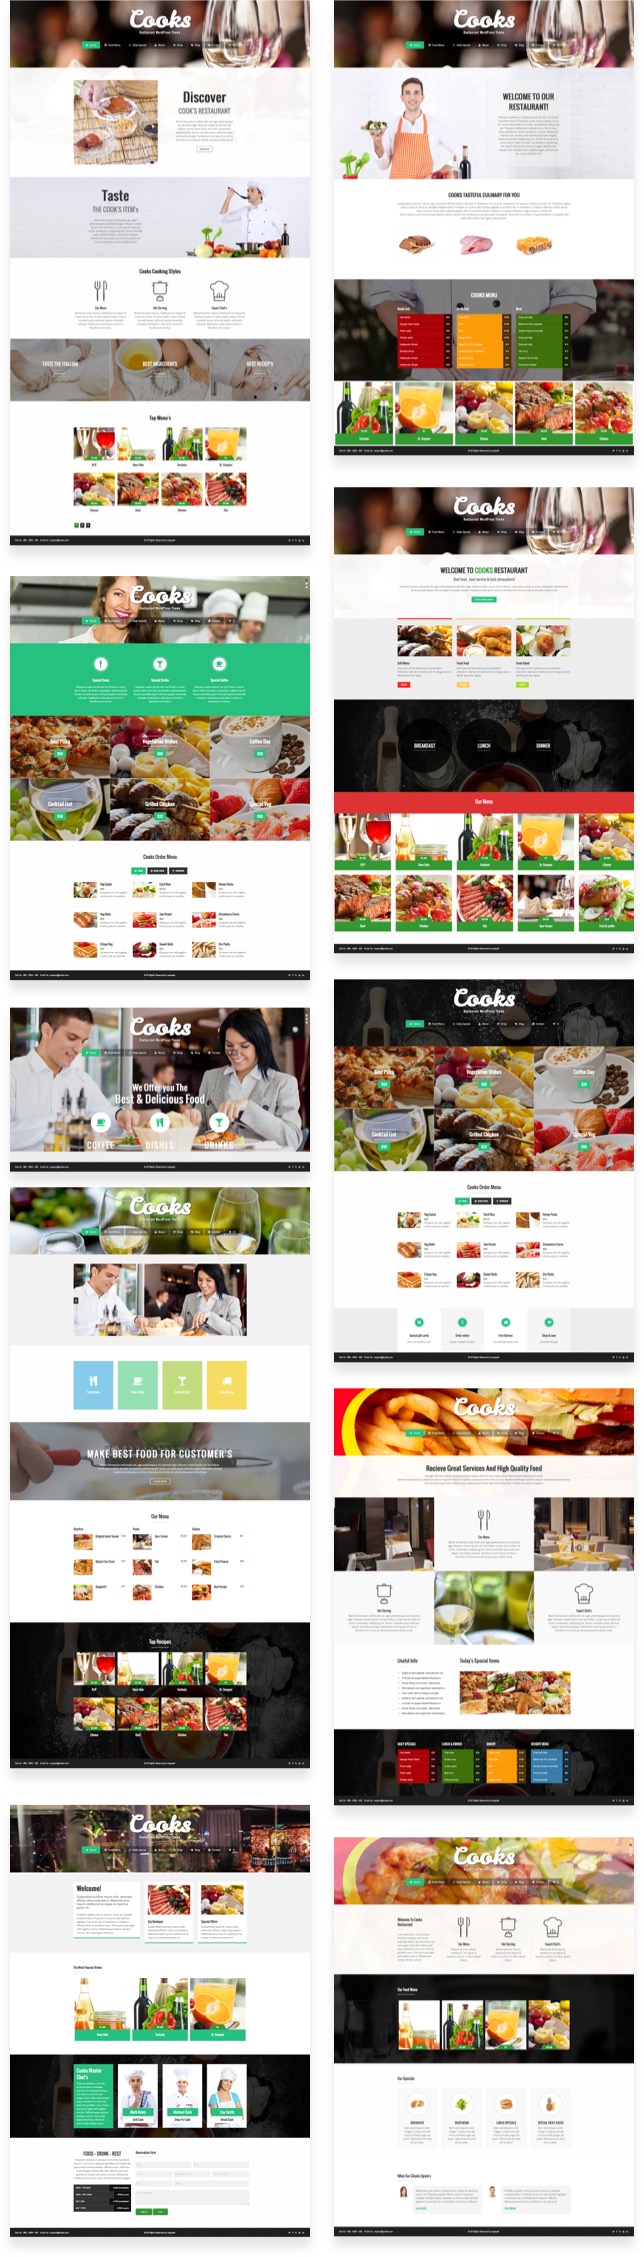 Cooks - Restaurant WordPress Theme - 1